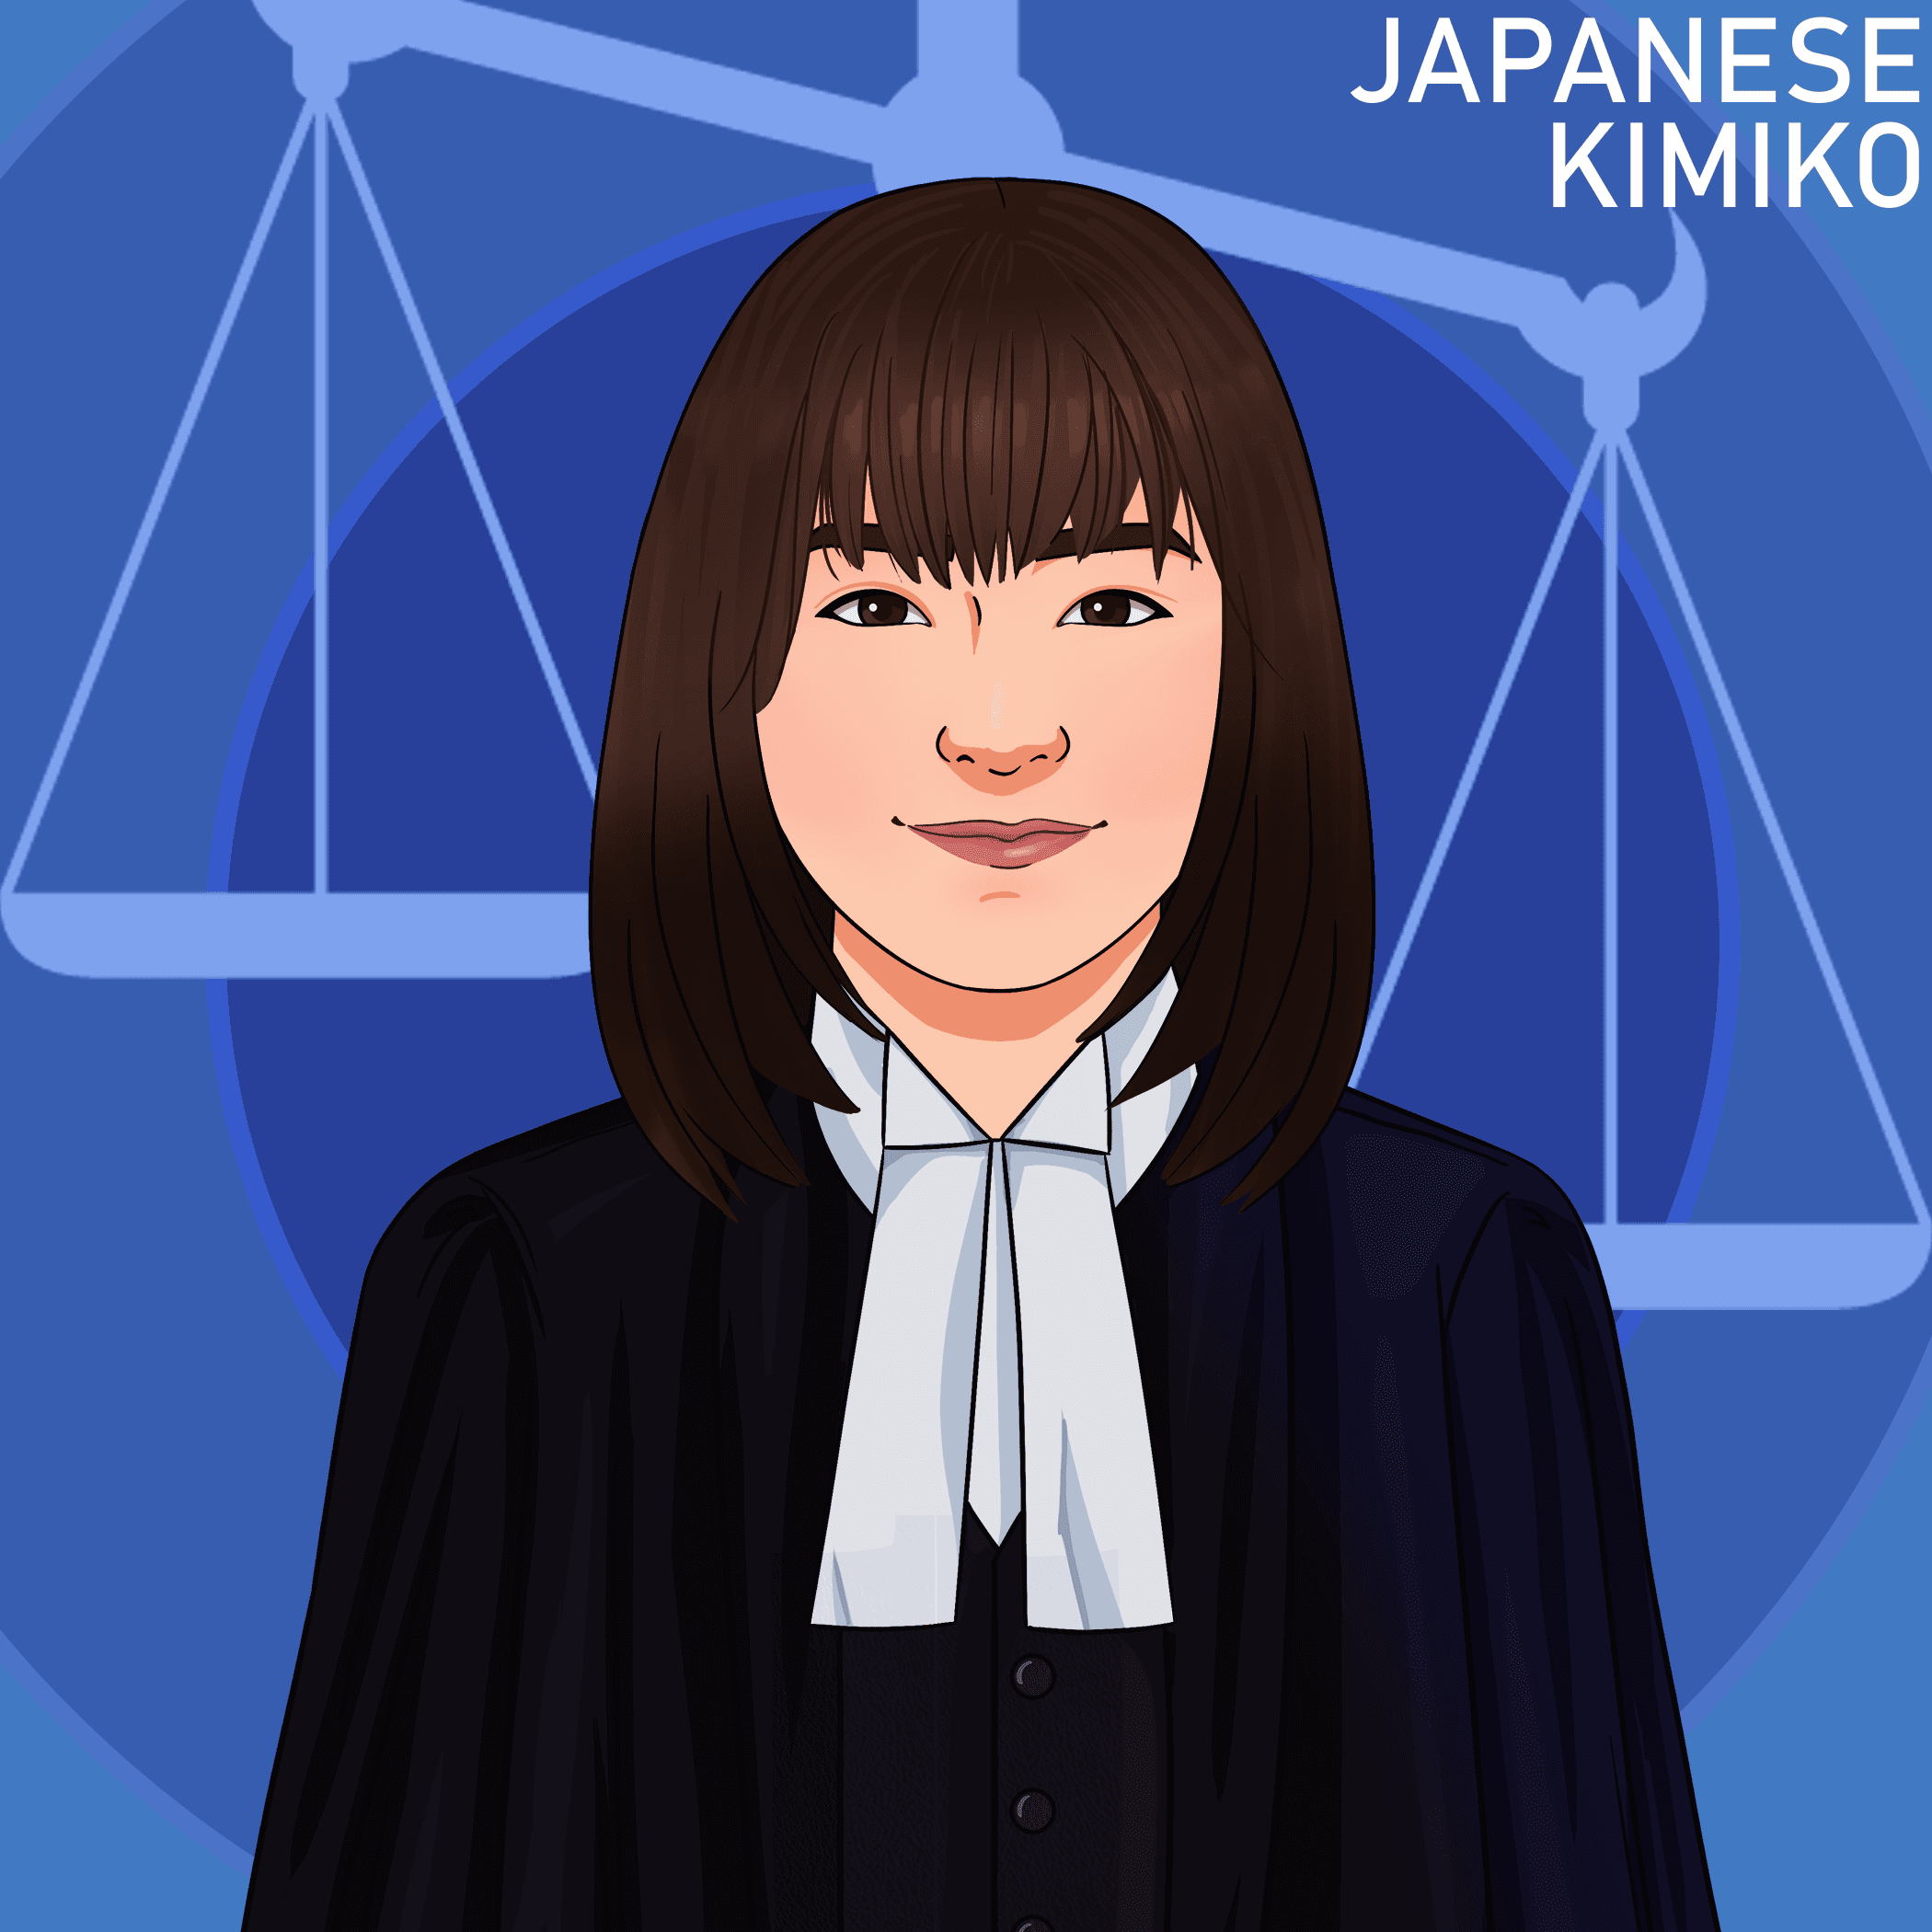 Lawyer